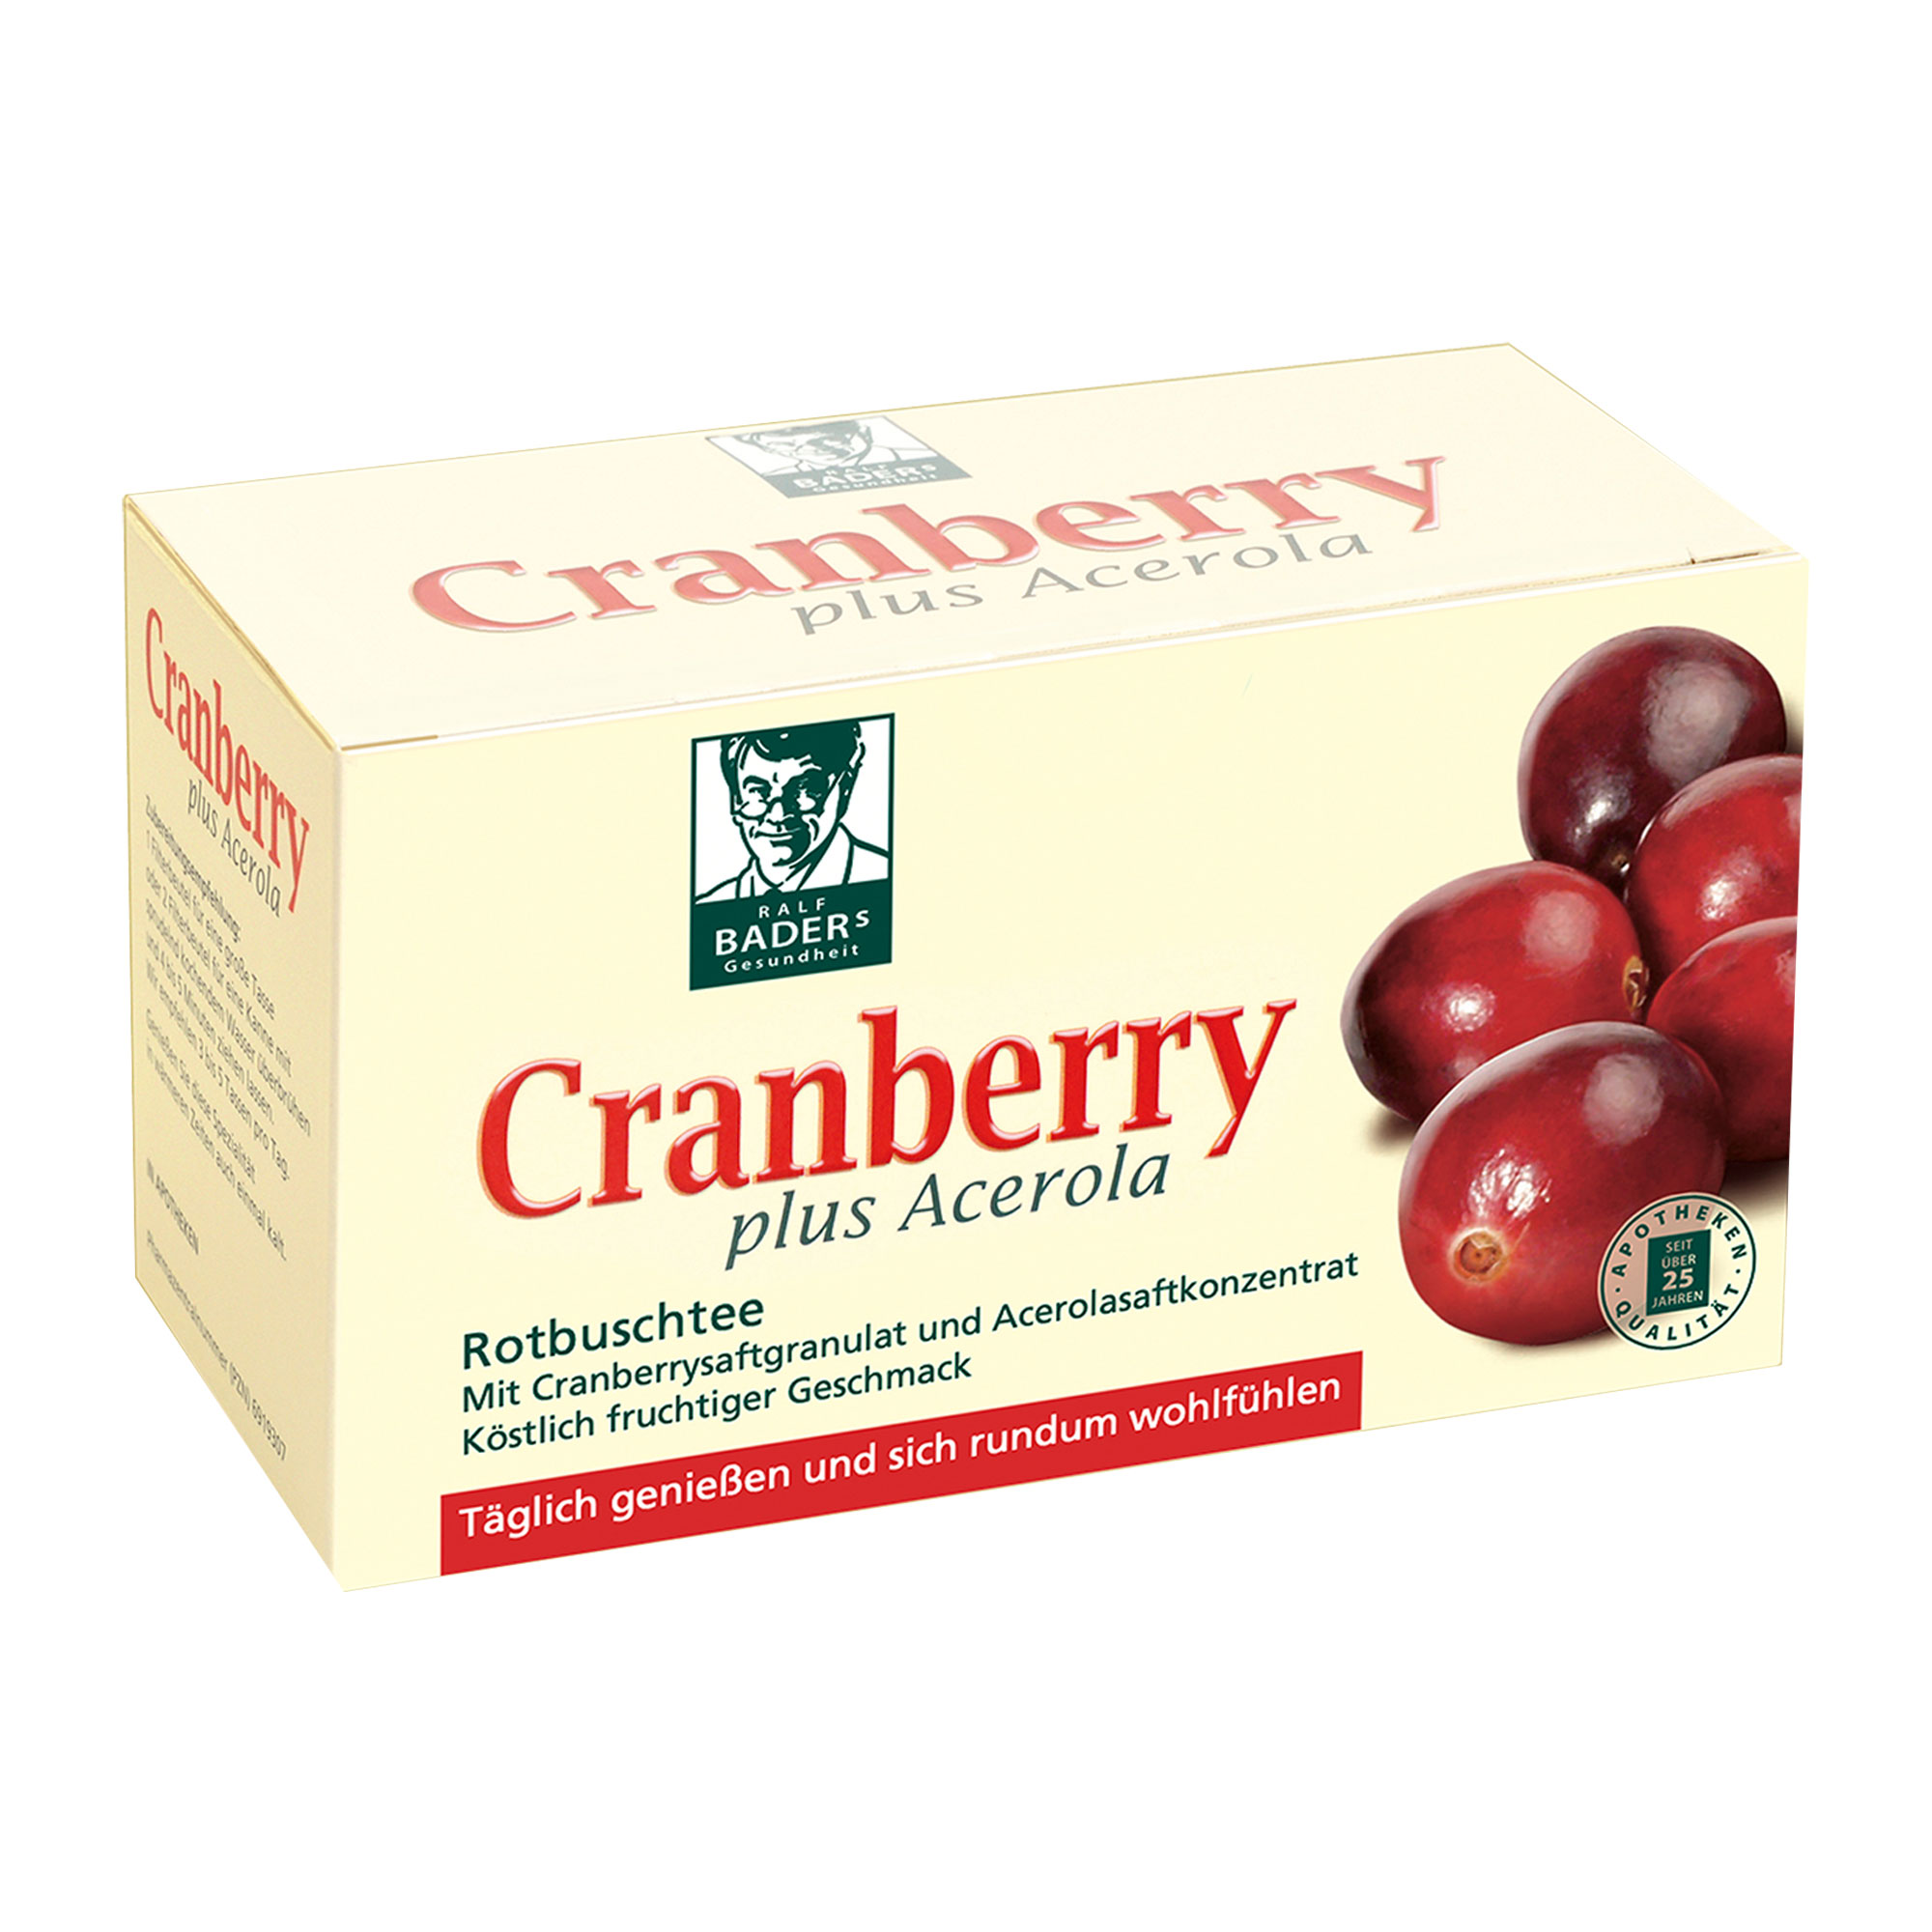 Rotbuschtee mit Cranberry-Saftgranulat und Acerola-Extrakt.